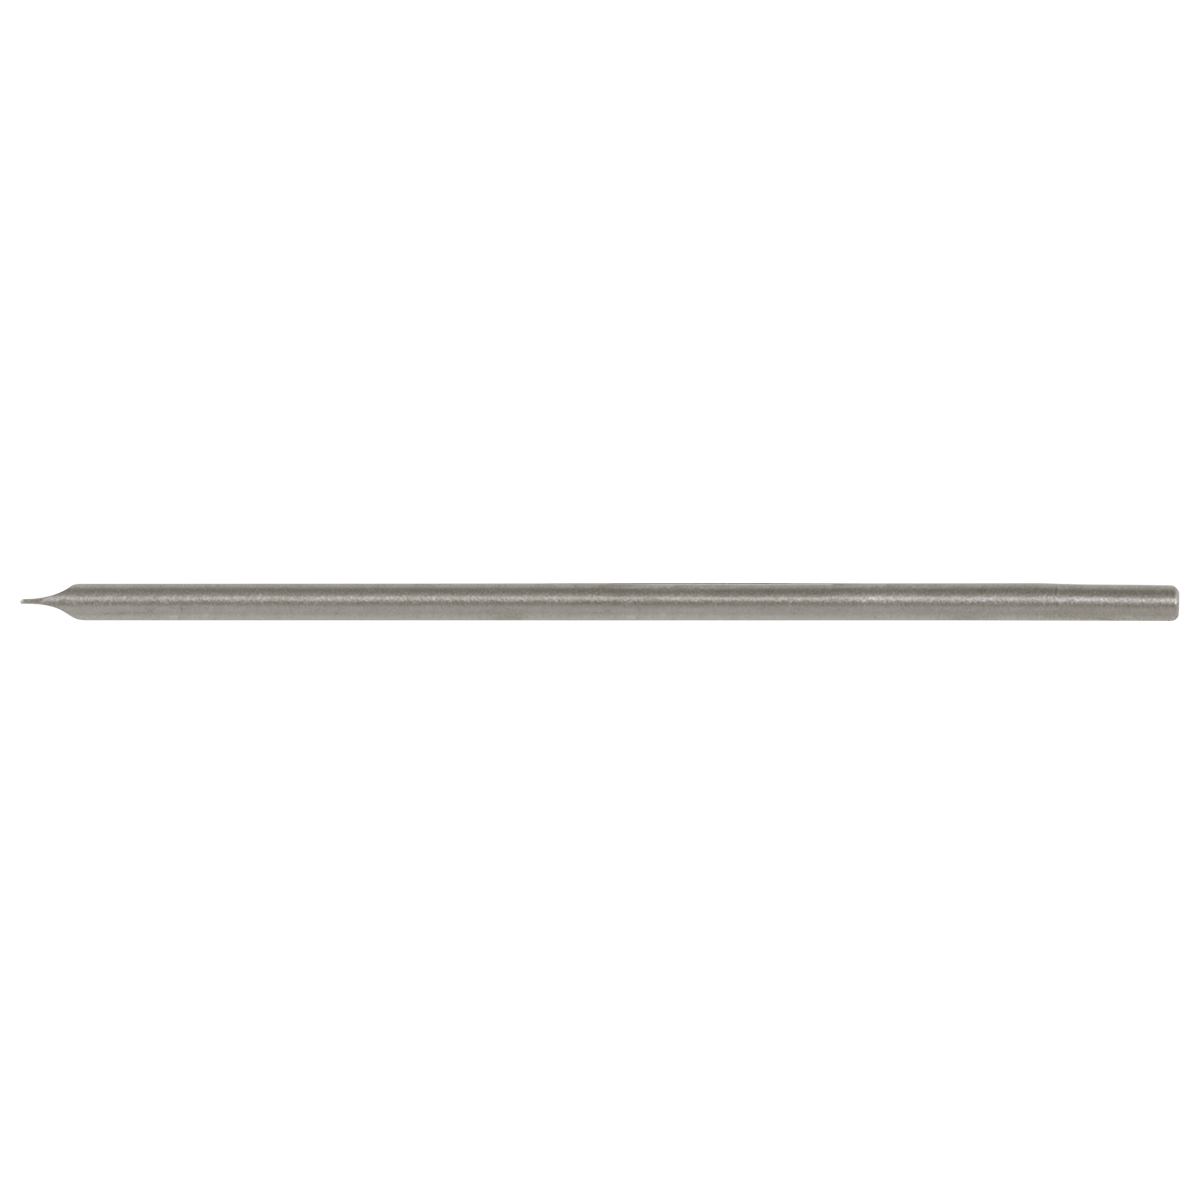 4 Blades for Ergo screwdriver, slot, 1,00 mm, hollow ground, black, stainless steel